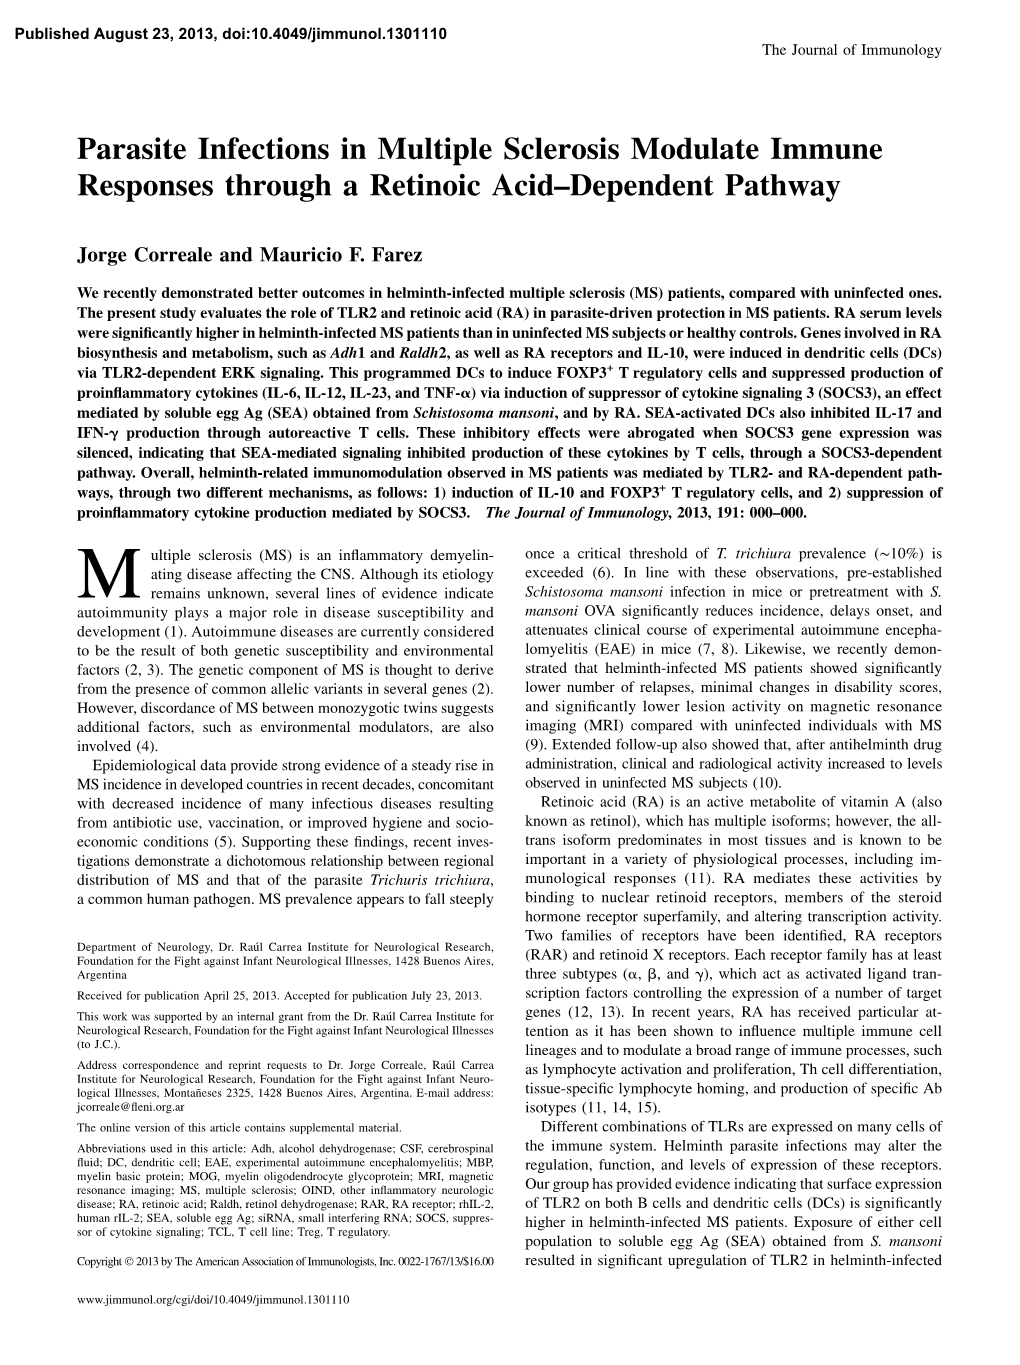 Retinoic Acid Modulate Immune Responses Through a Parasite